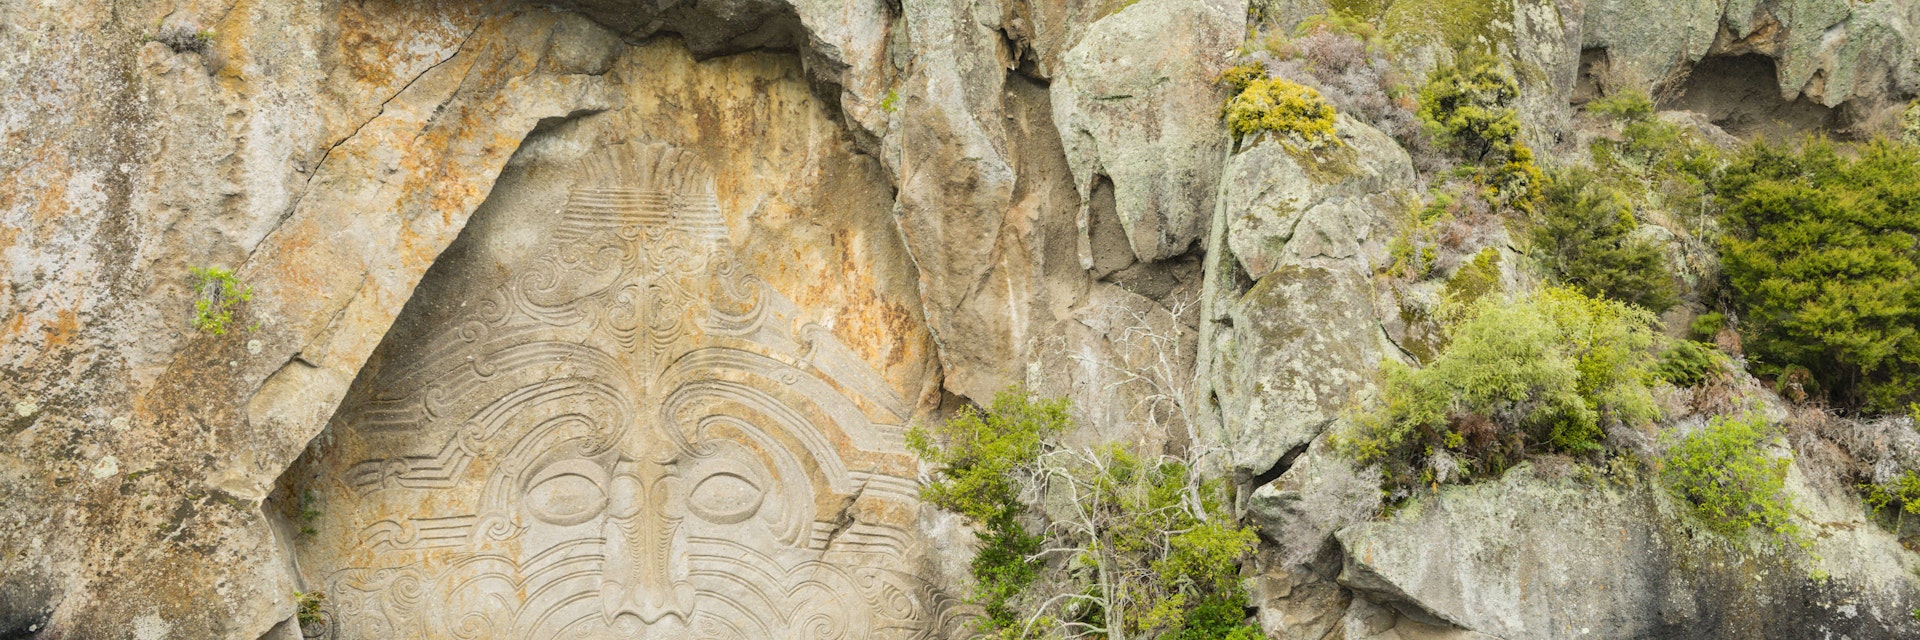 Maori rock carving at Mine Bay, Lake Taupo, North Island, New Zealand.